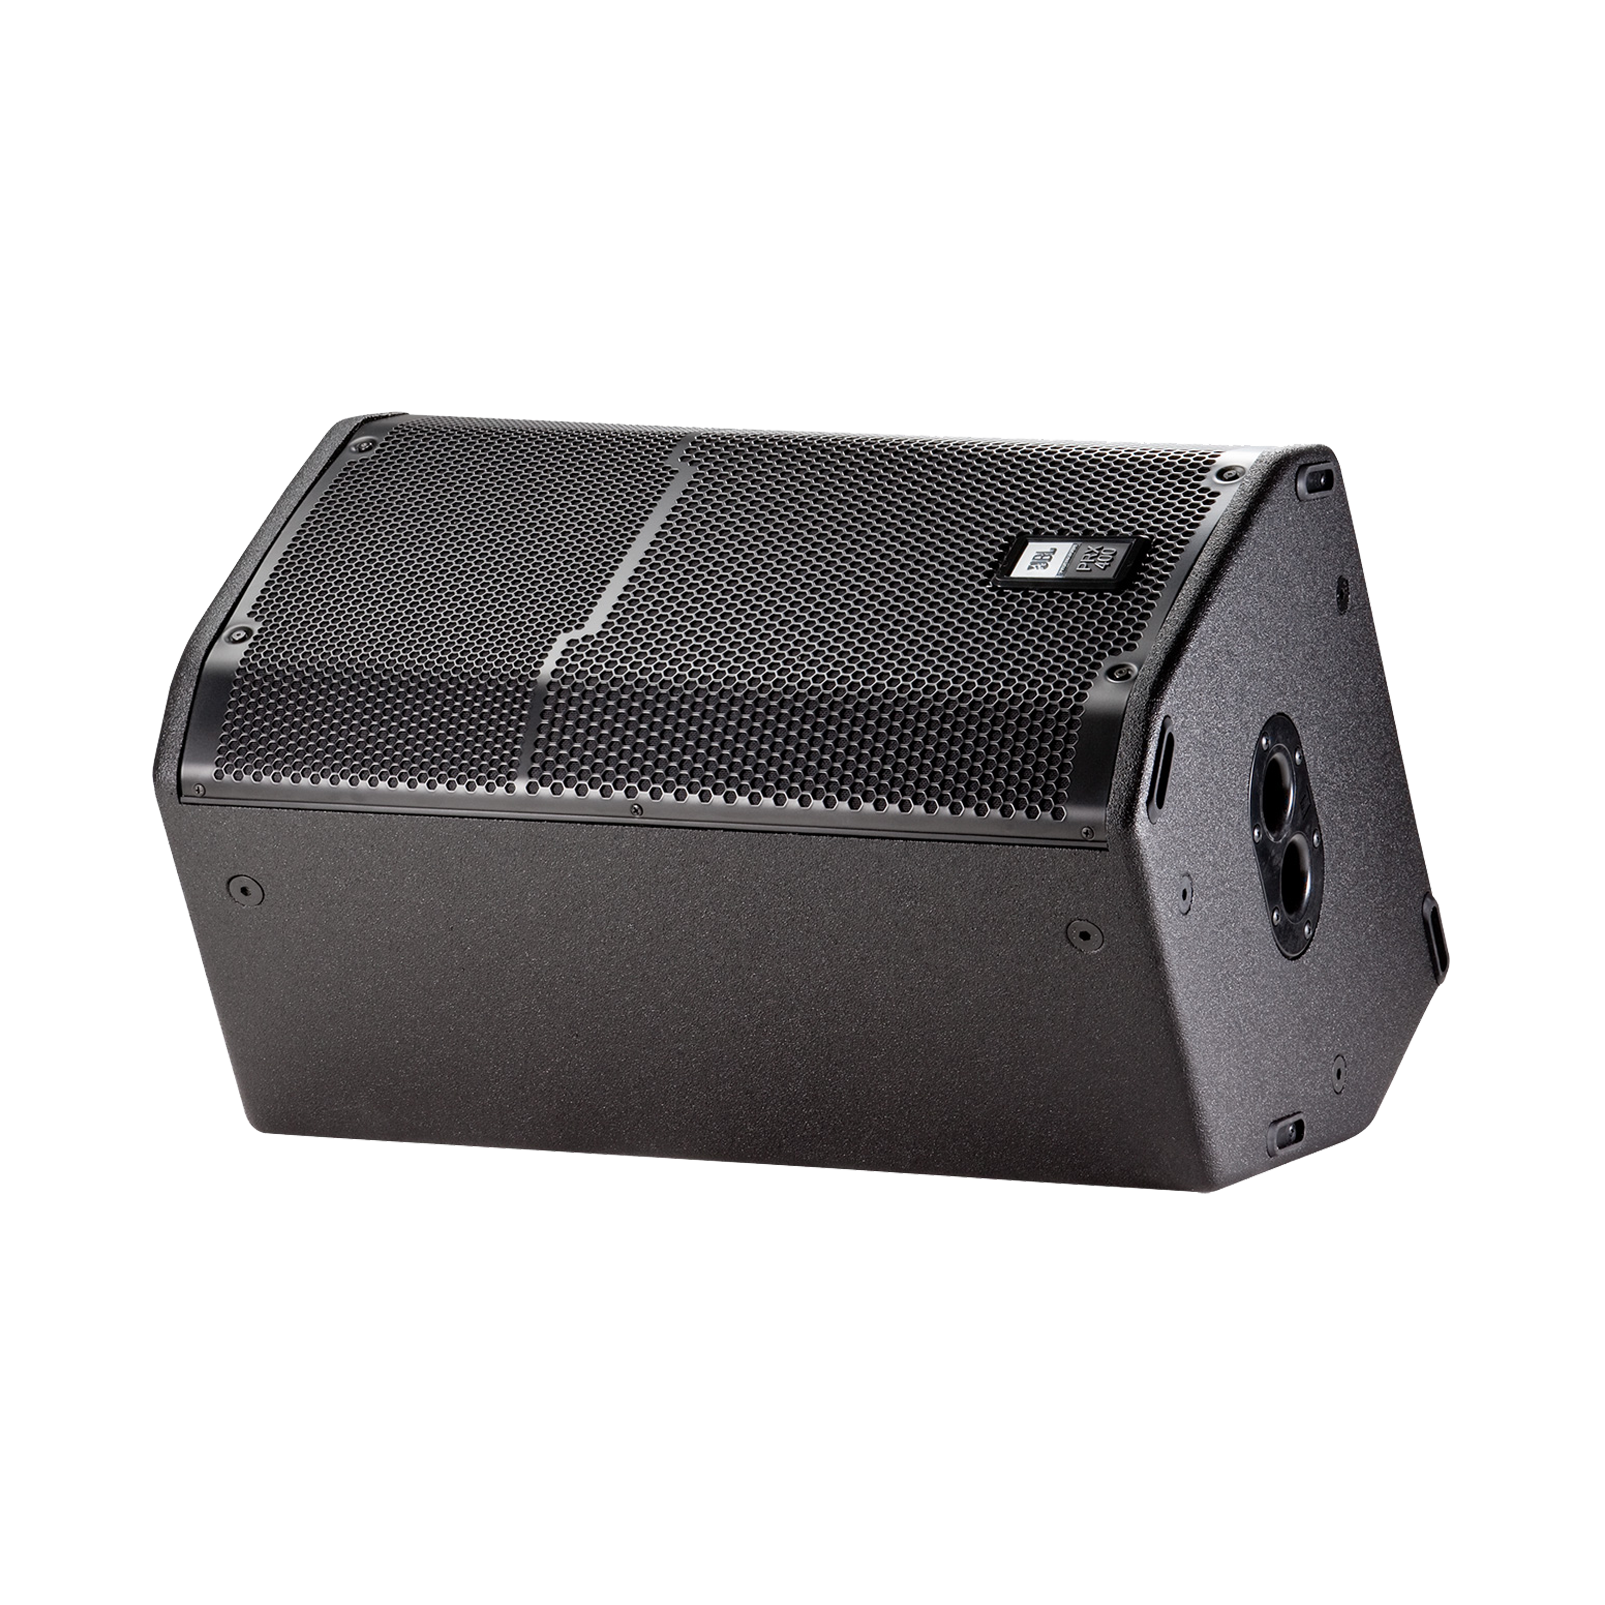 JBL PRX412M - Black - 12" Two-Way Stage Monitor and Loudspeaker System - Detailshot 2